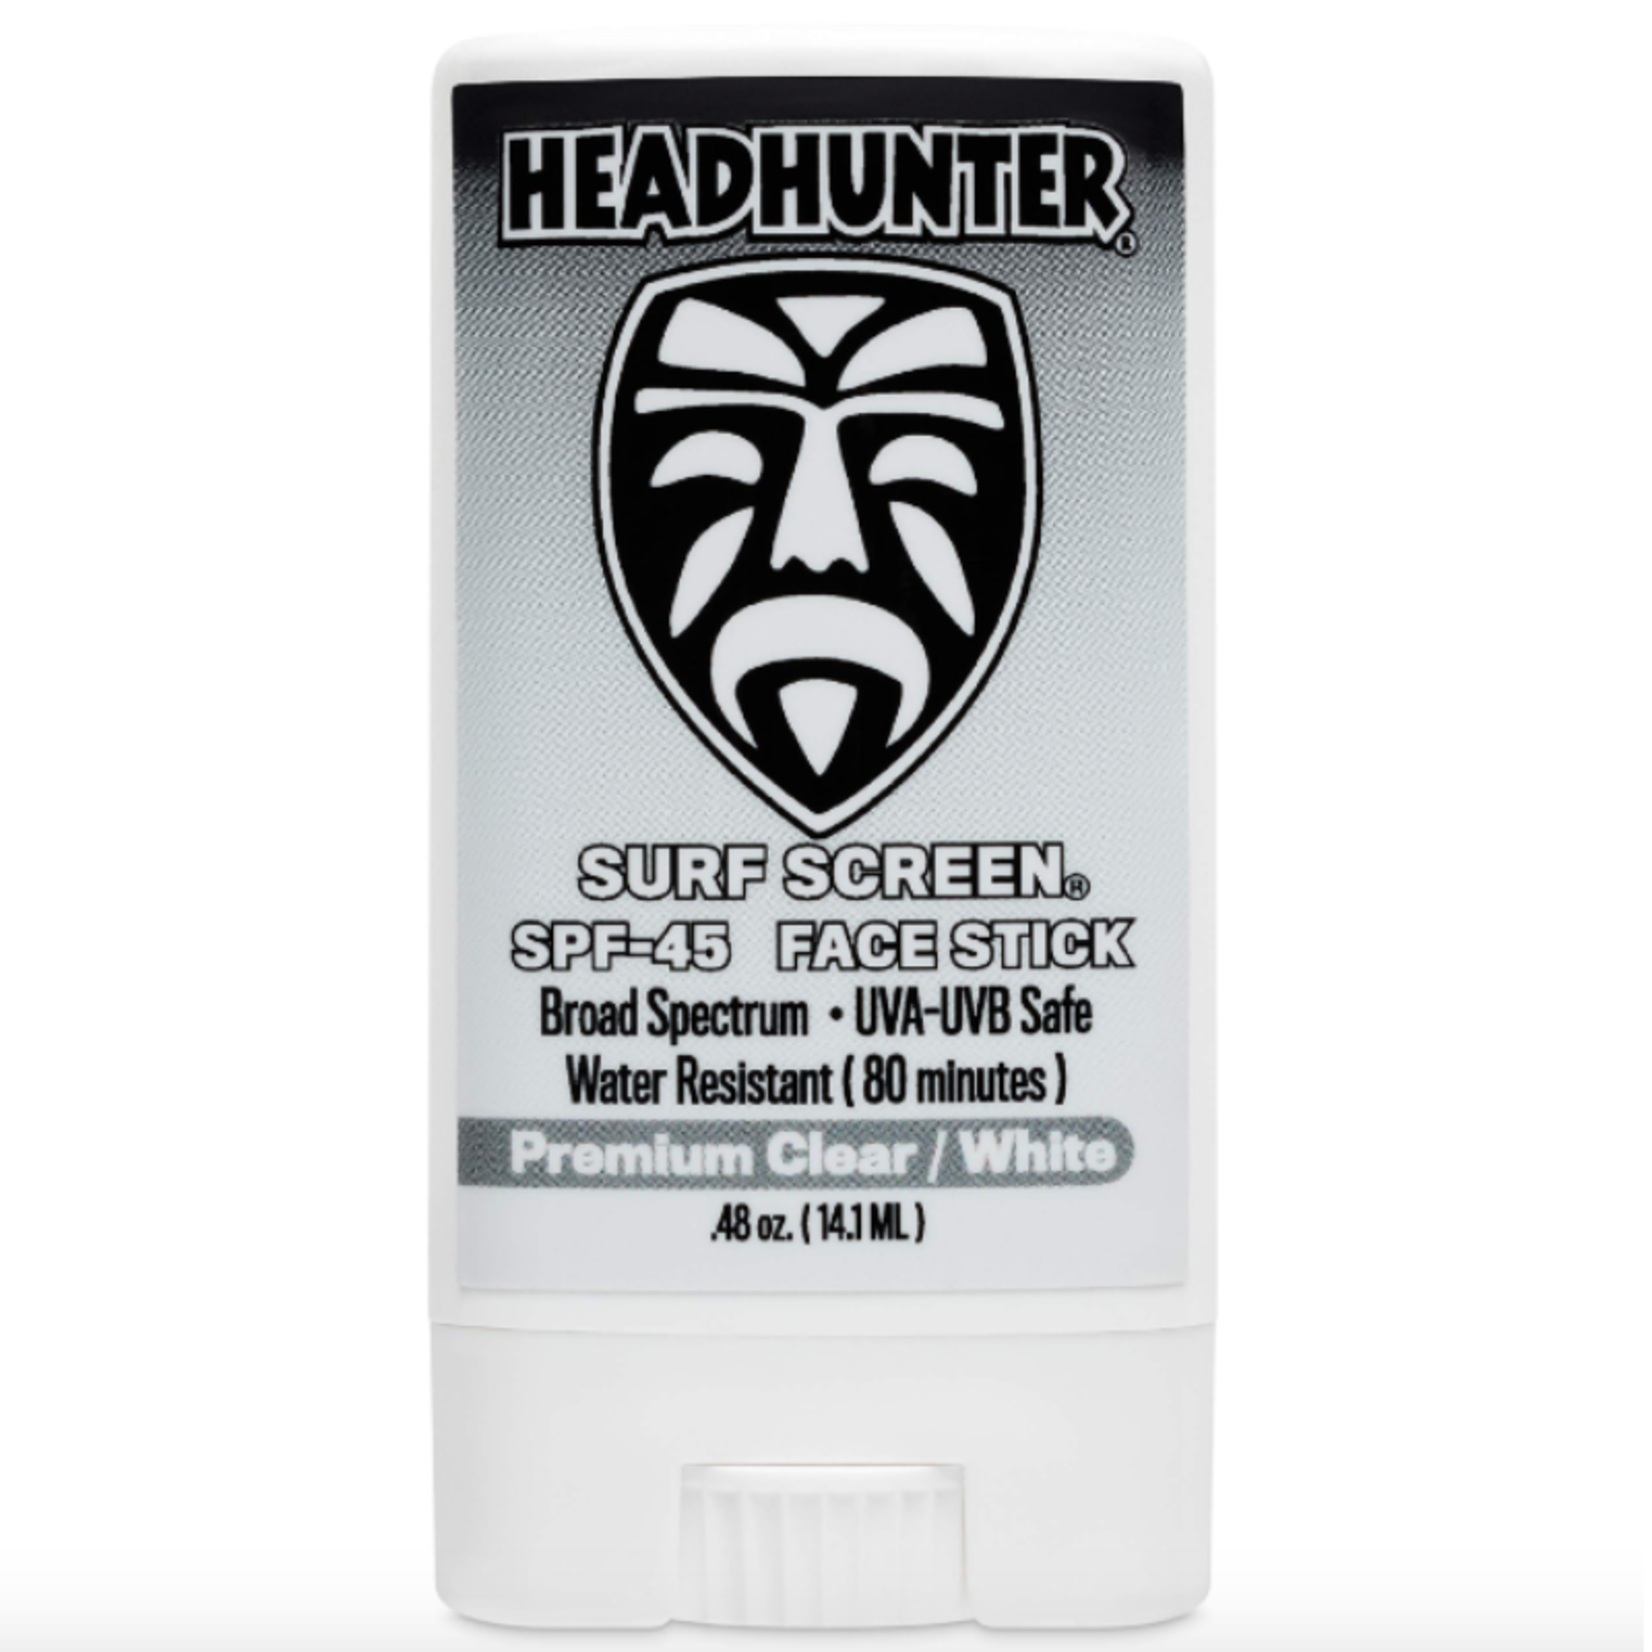 Headhunter Headhunter Face Stick SPF-45 Clear 0.43 Oz.